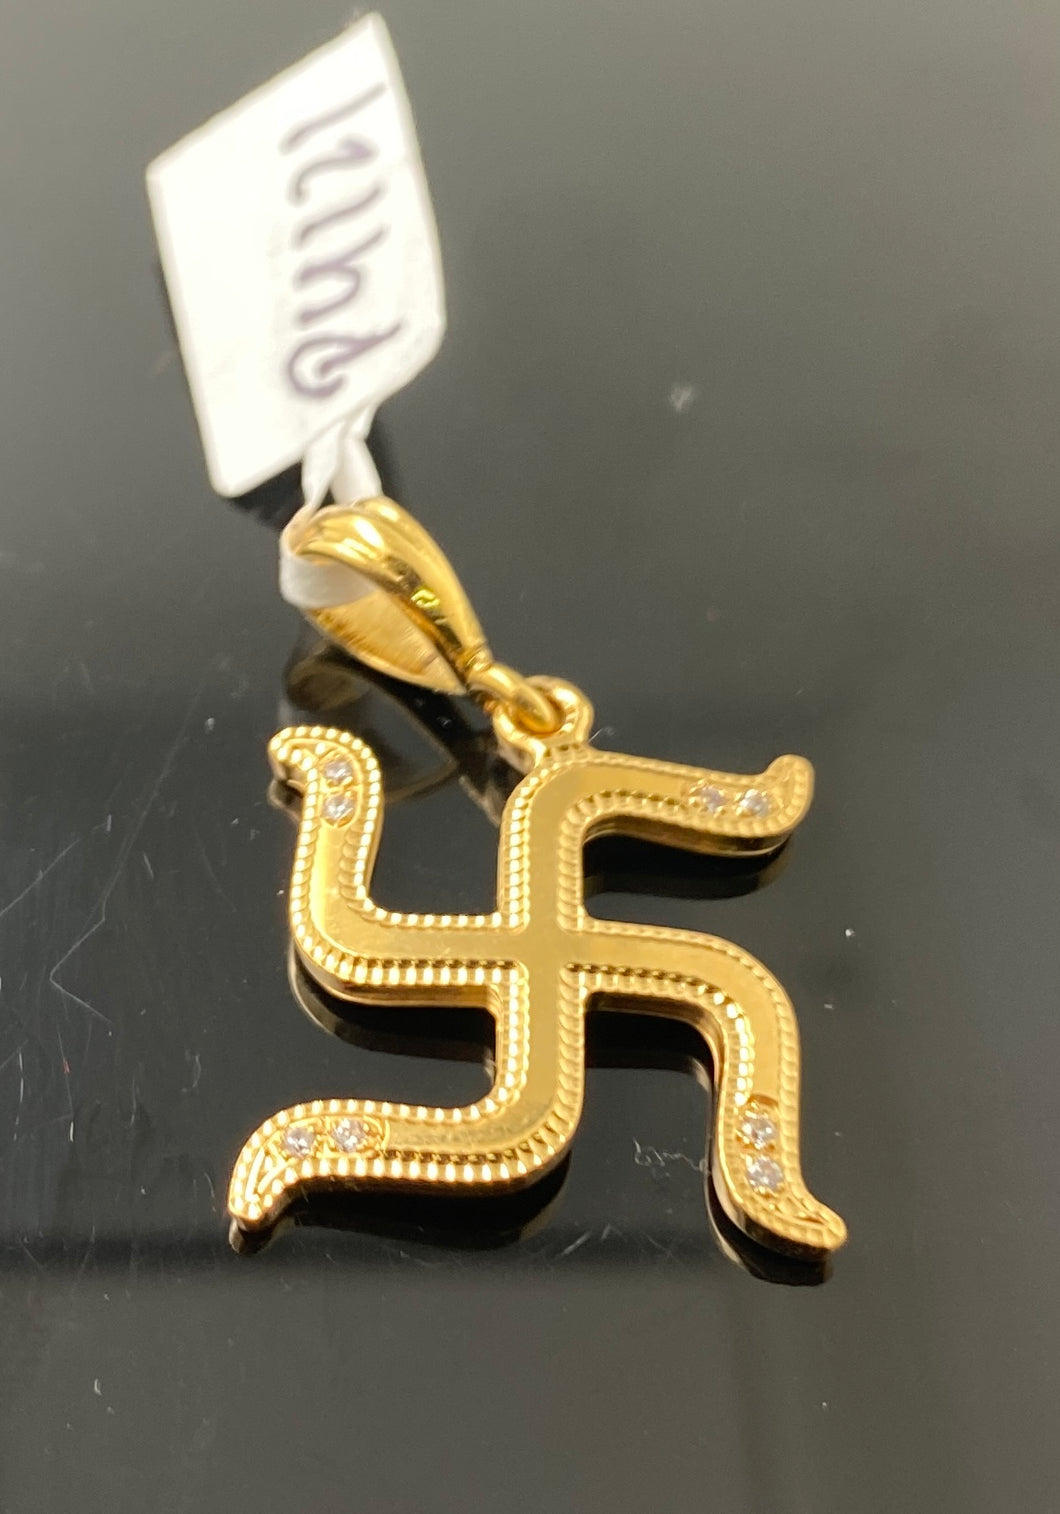 22k Solid Gold Simple Buddhism Religious Pendant p4121 - Royal Dubai Jewellers